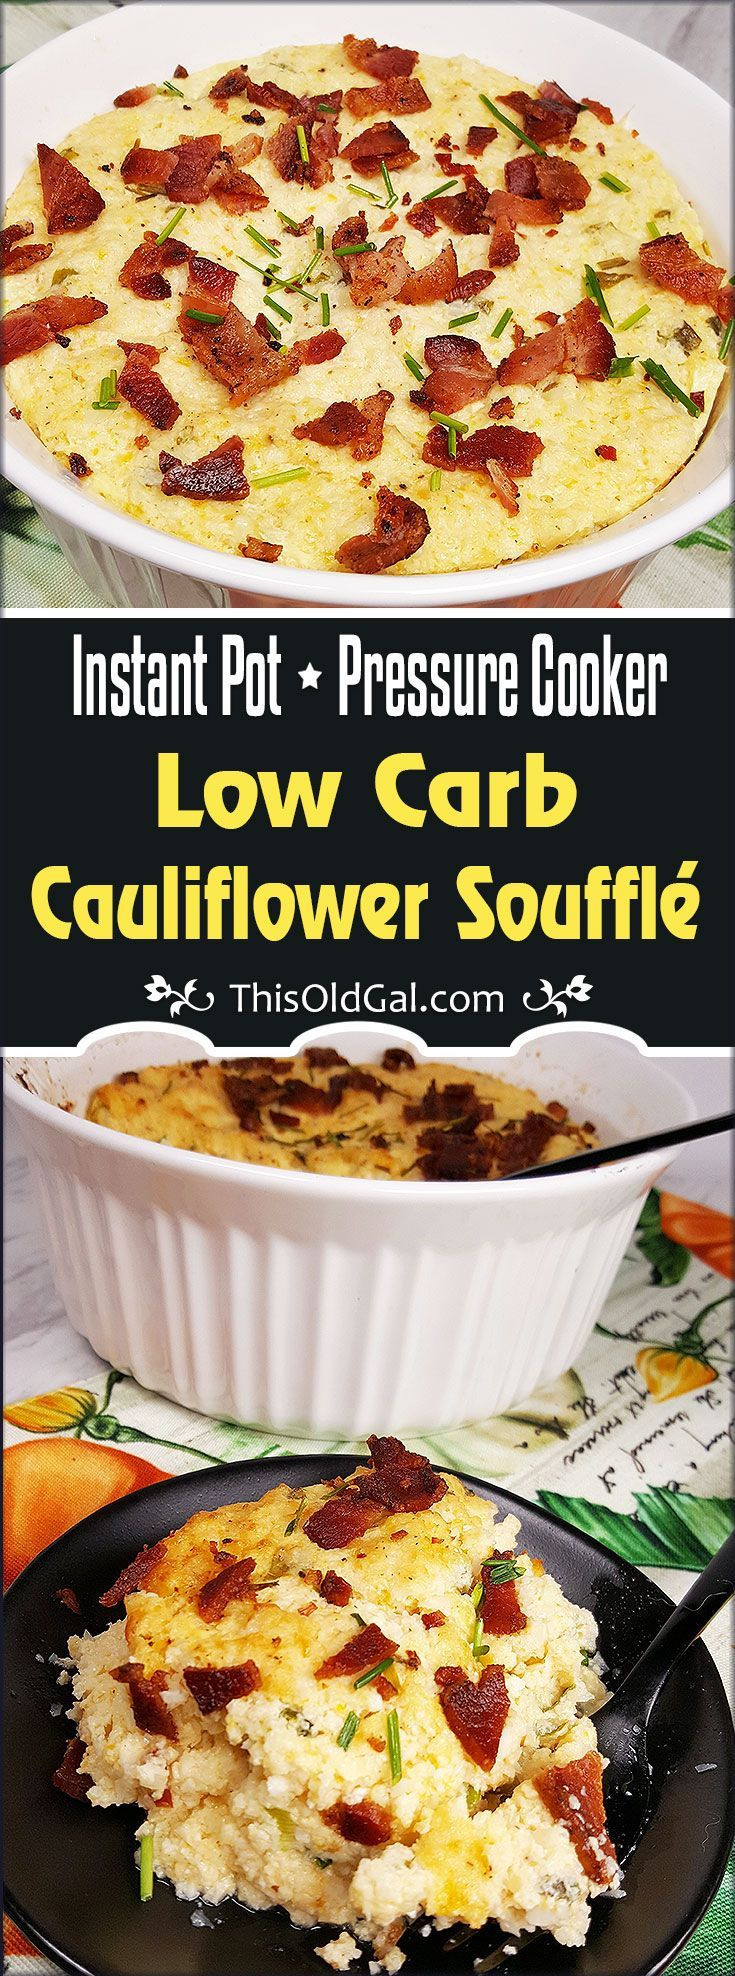 Low Calorie Pressure Cooker Recipes
 Pressure Cooker Cauliflower Soufflé is a simple Low Carb